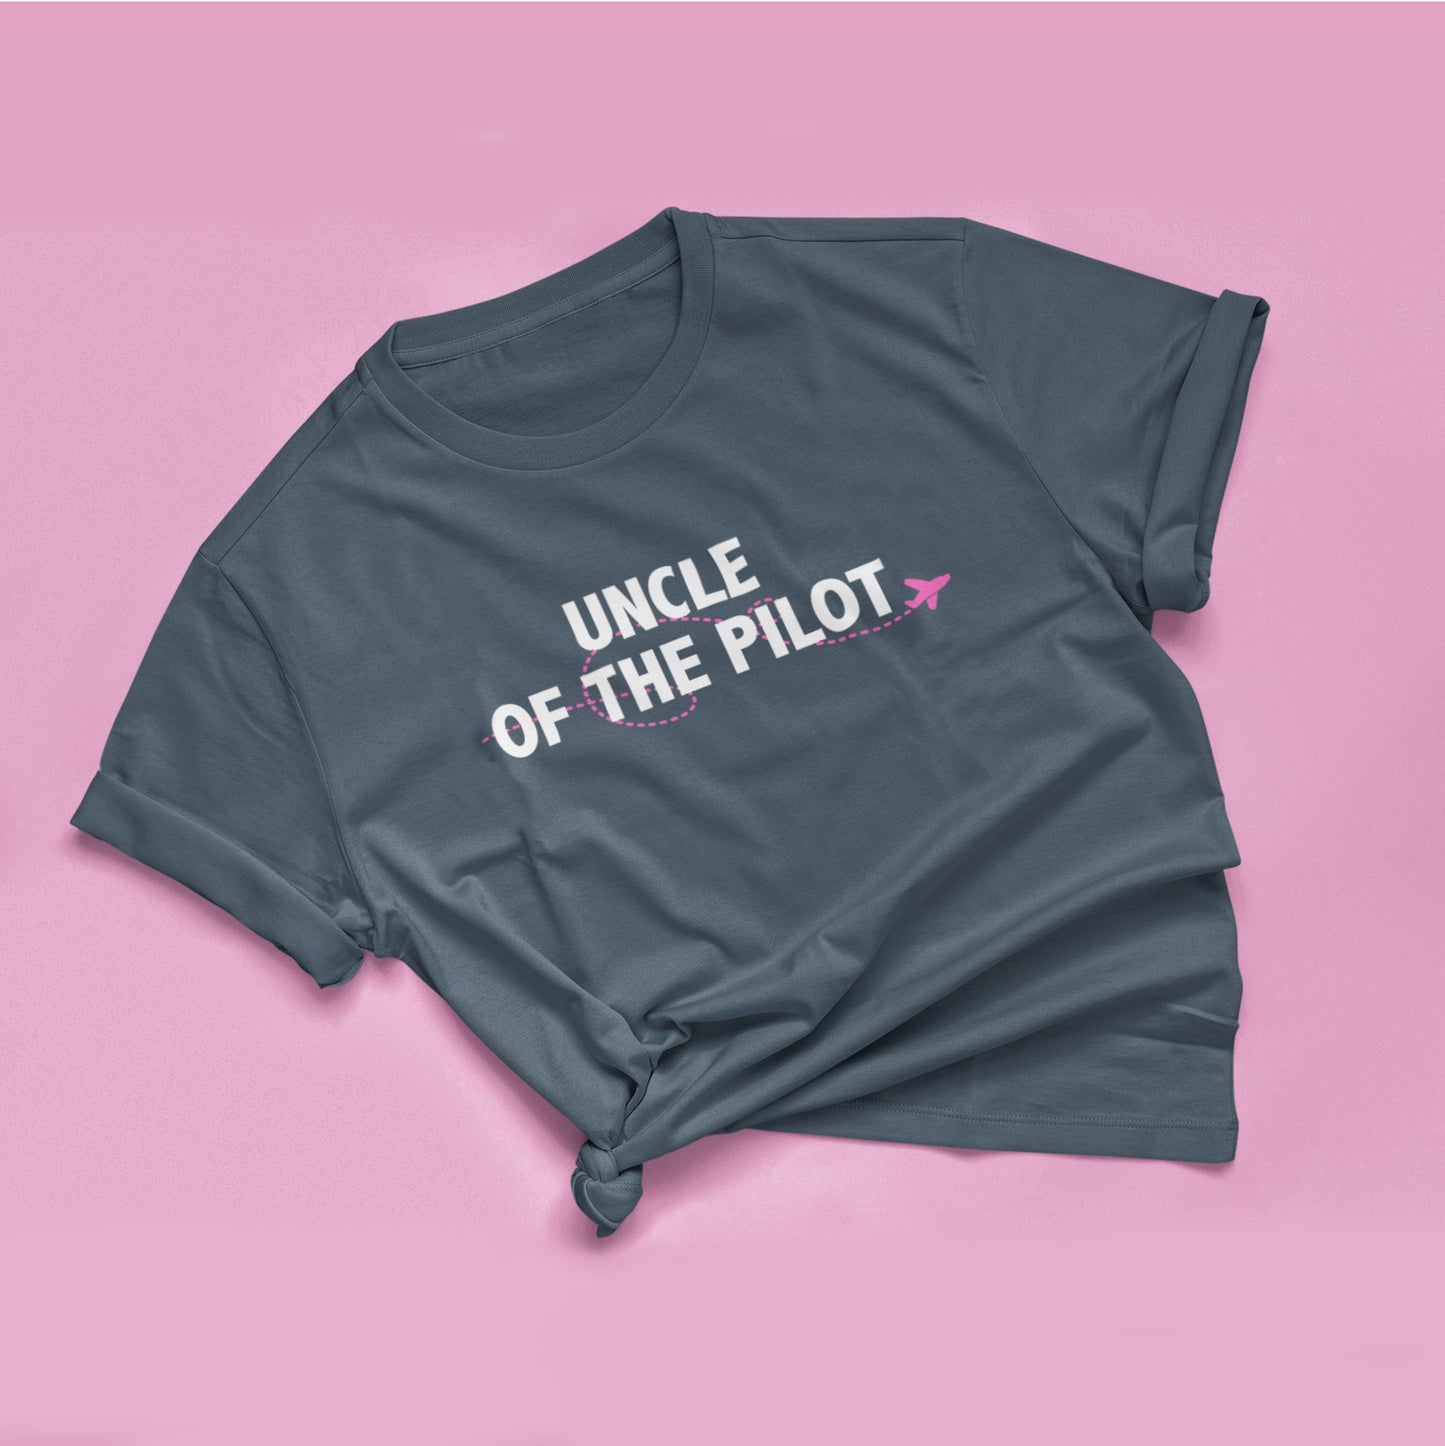 Uncle of the/a Pilot T-shirt